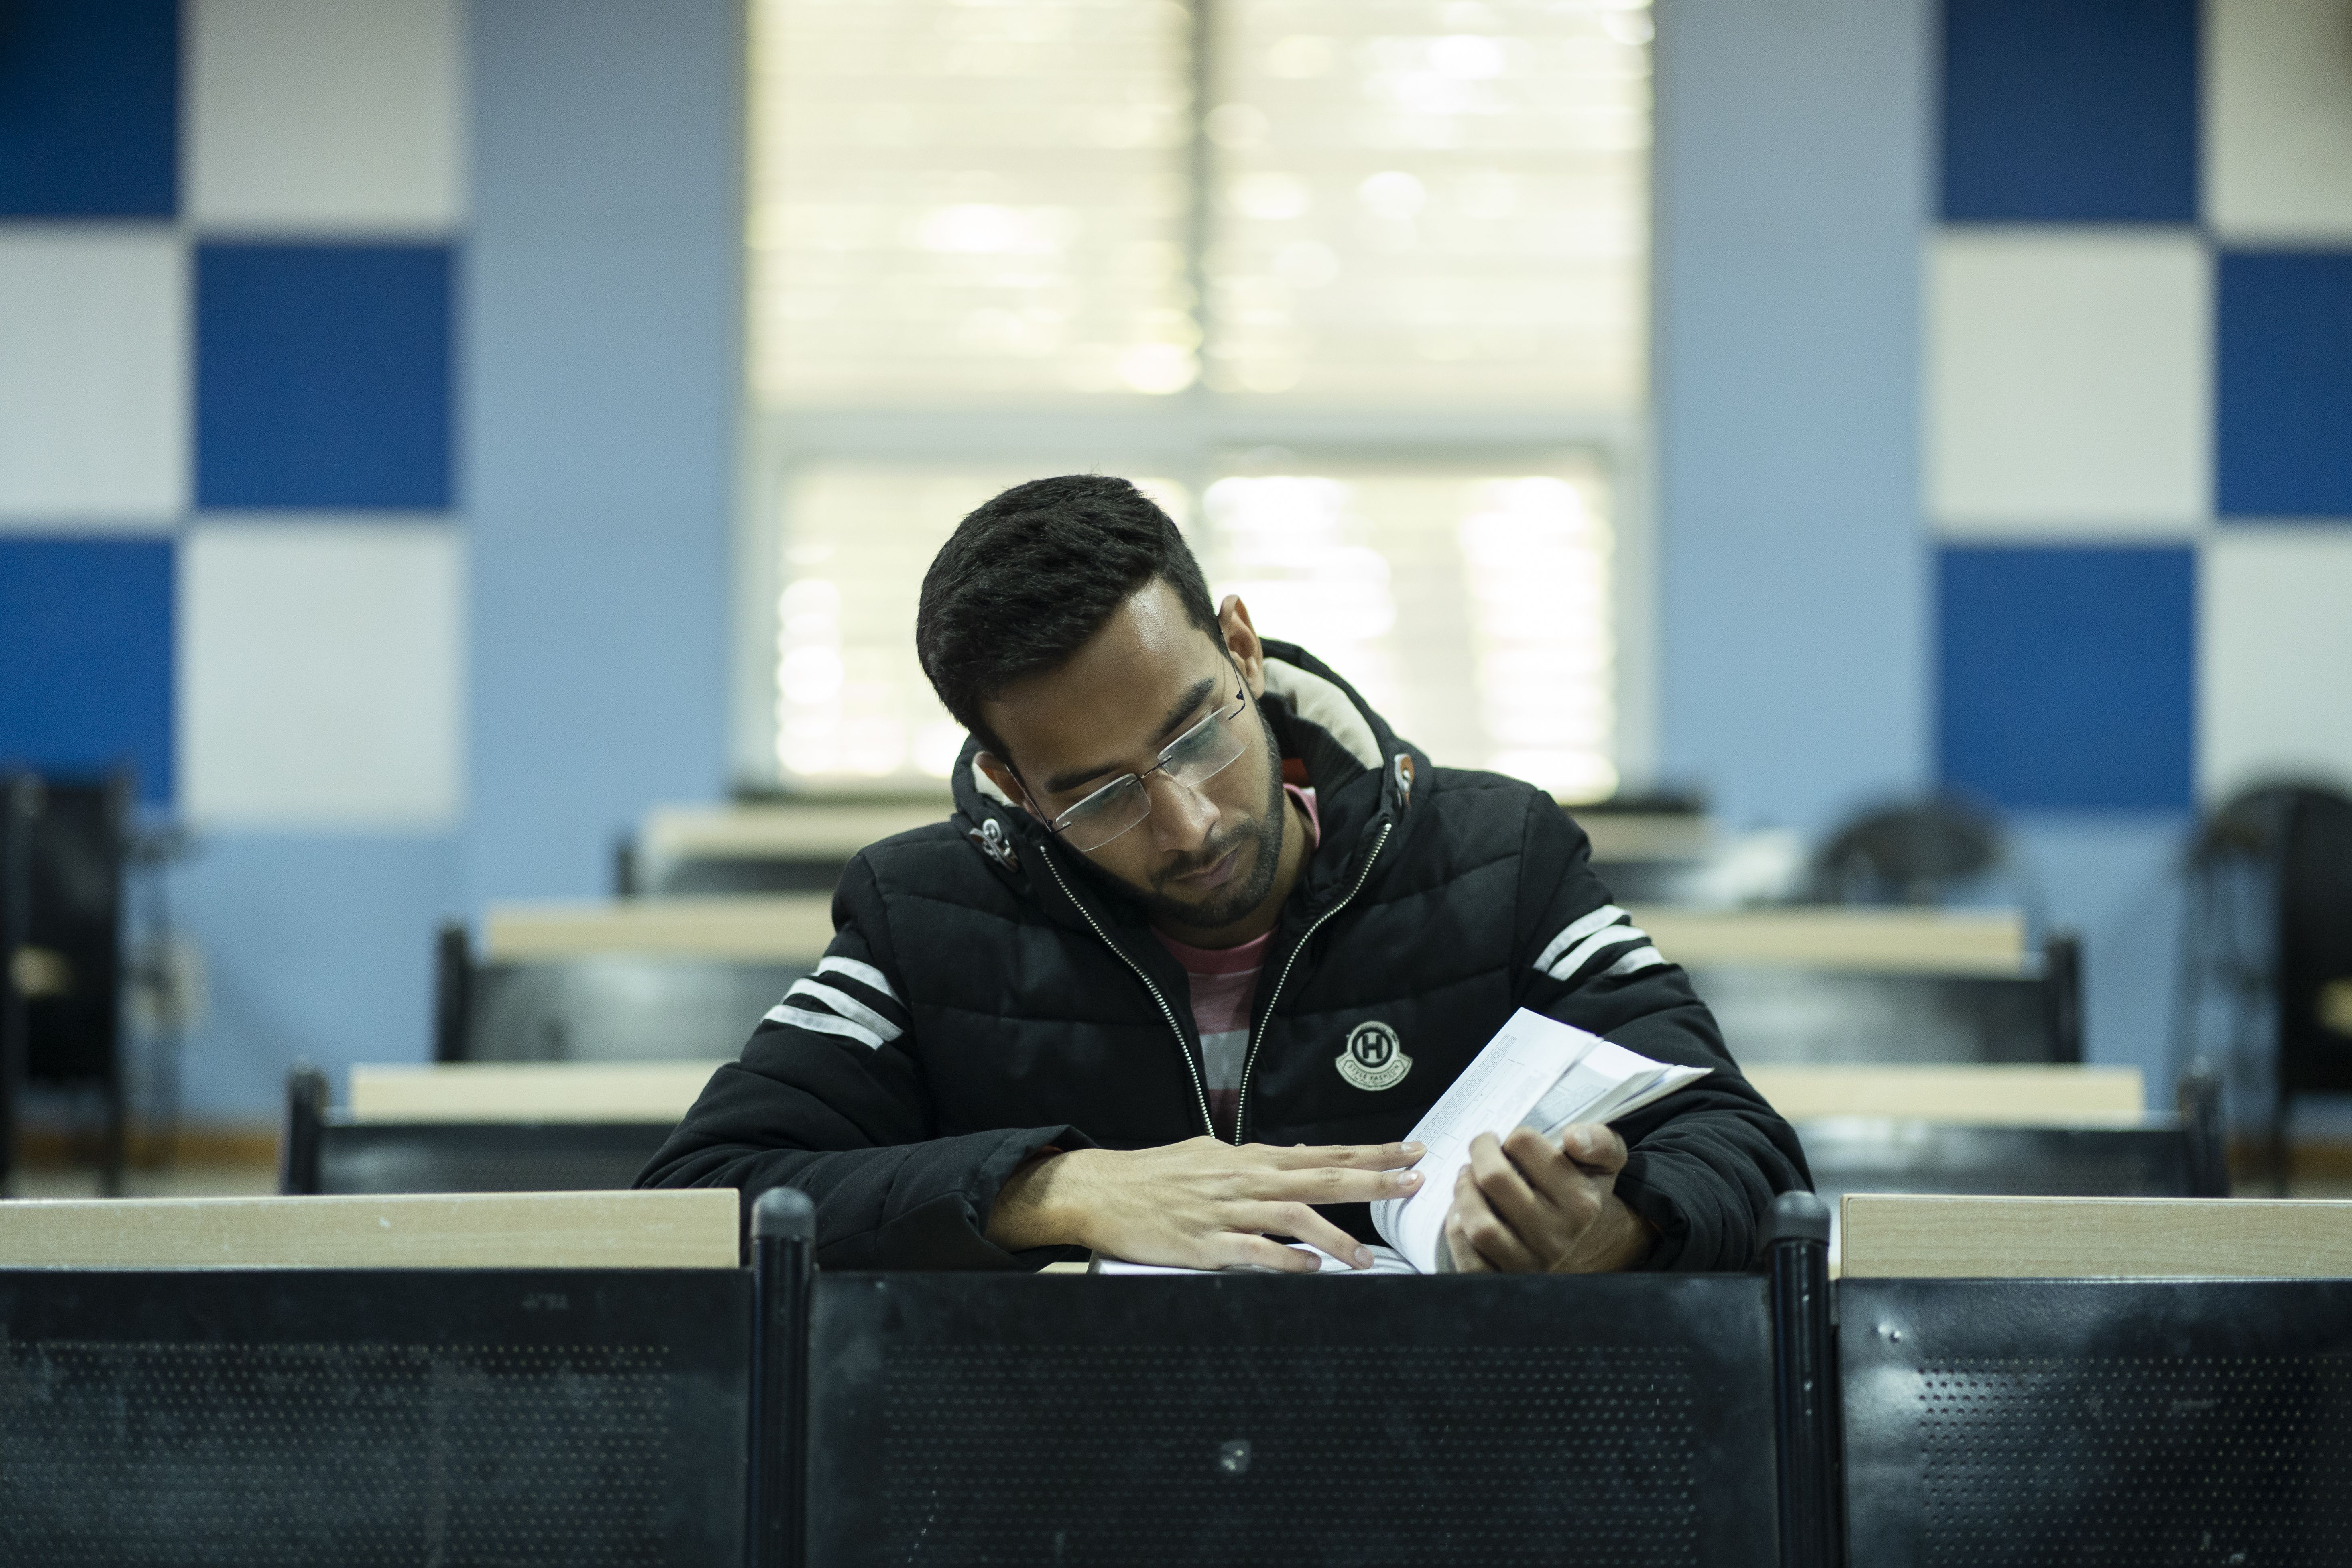 Zubair is pursuing an MBA at Jamia Millia Islamia University, a central government university in New Delhi (AtlasNetwork.org Photo/Bernat Parera).